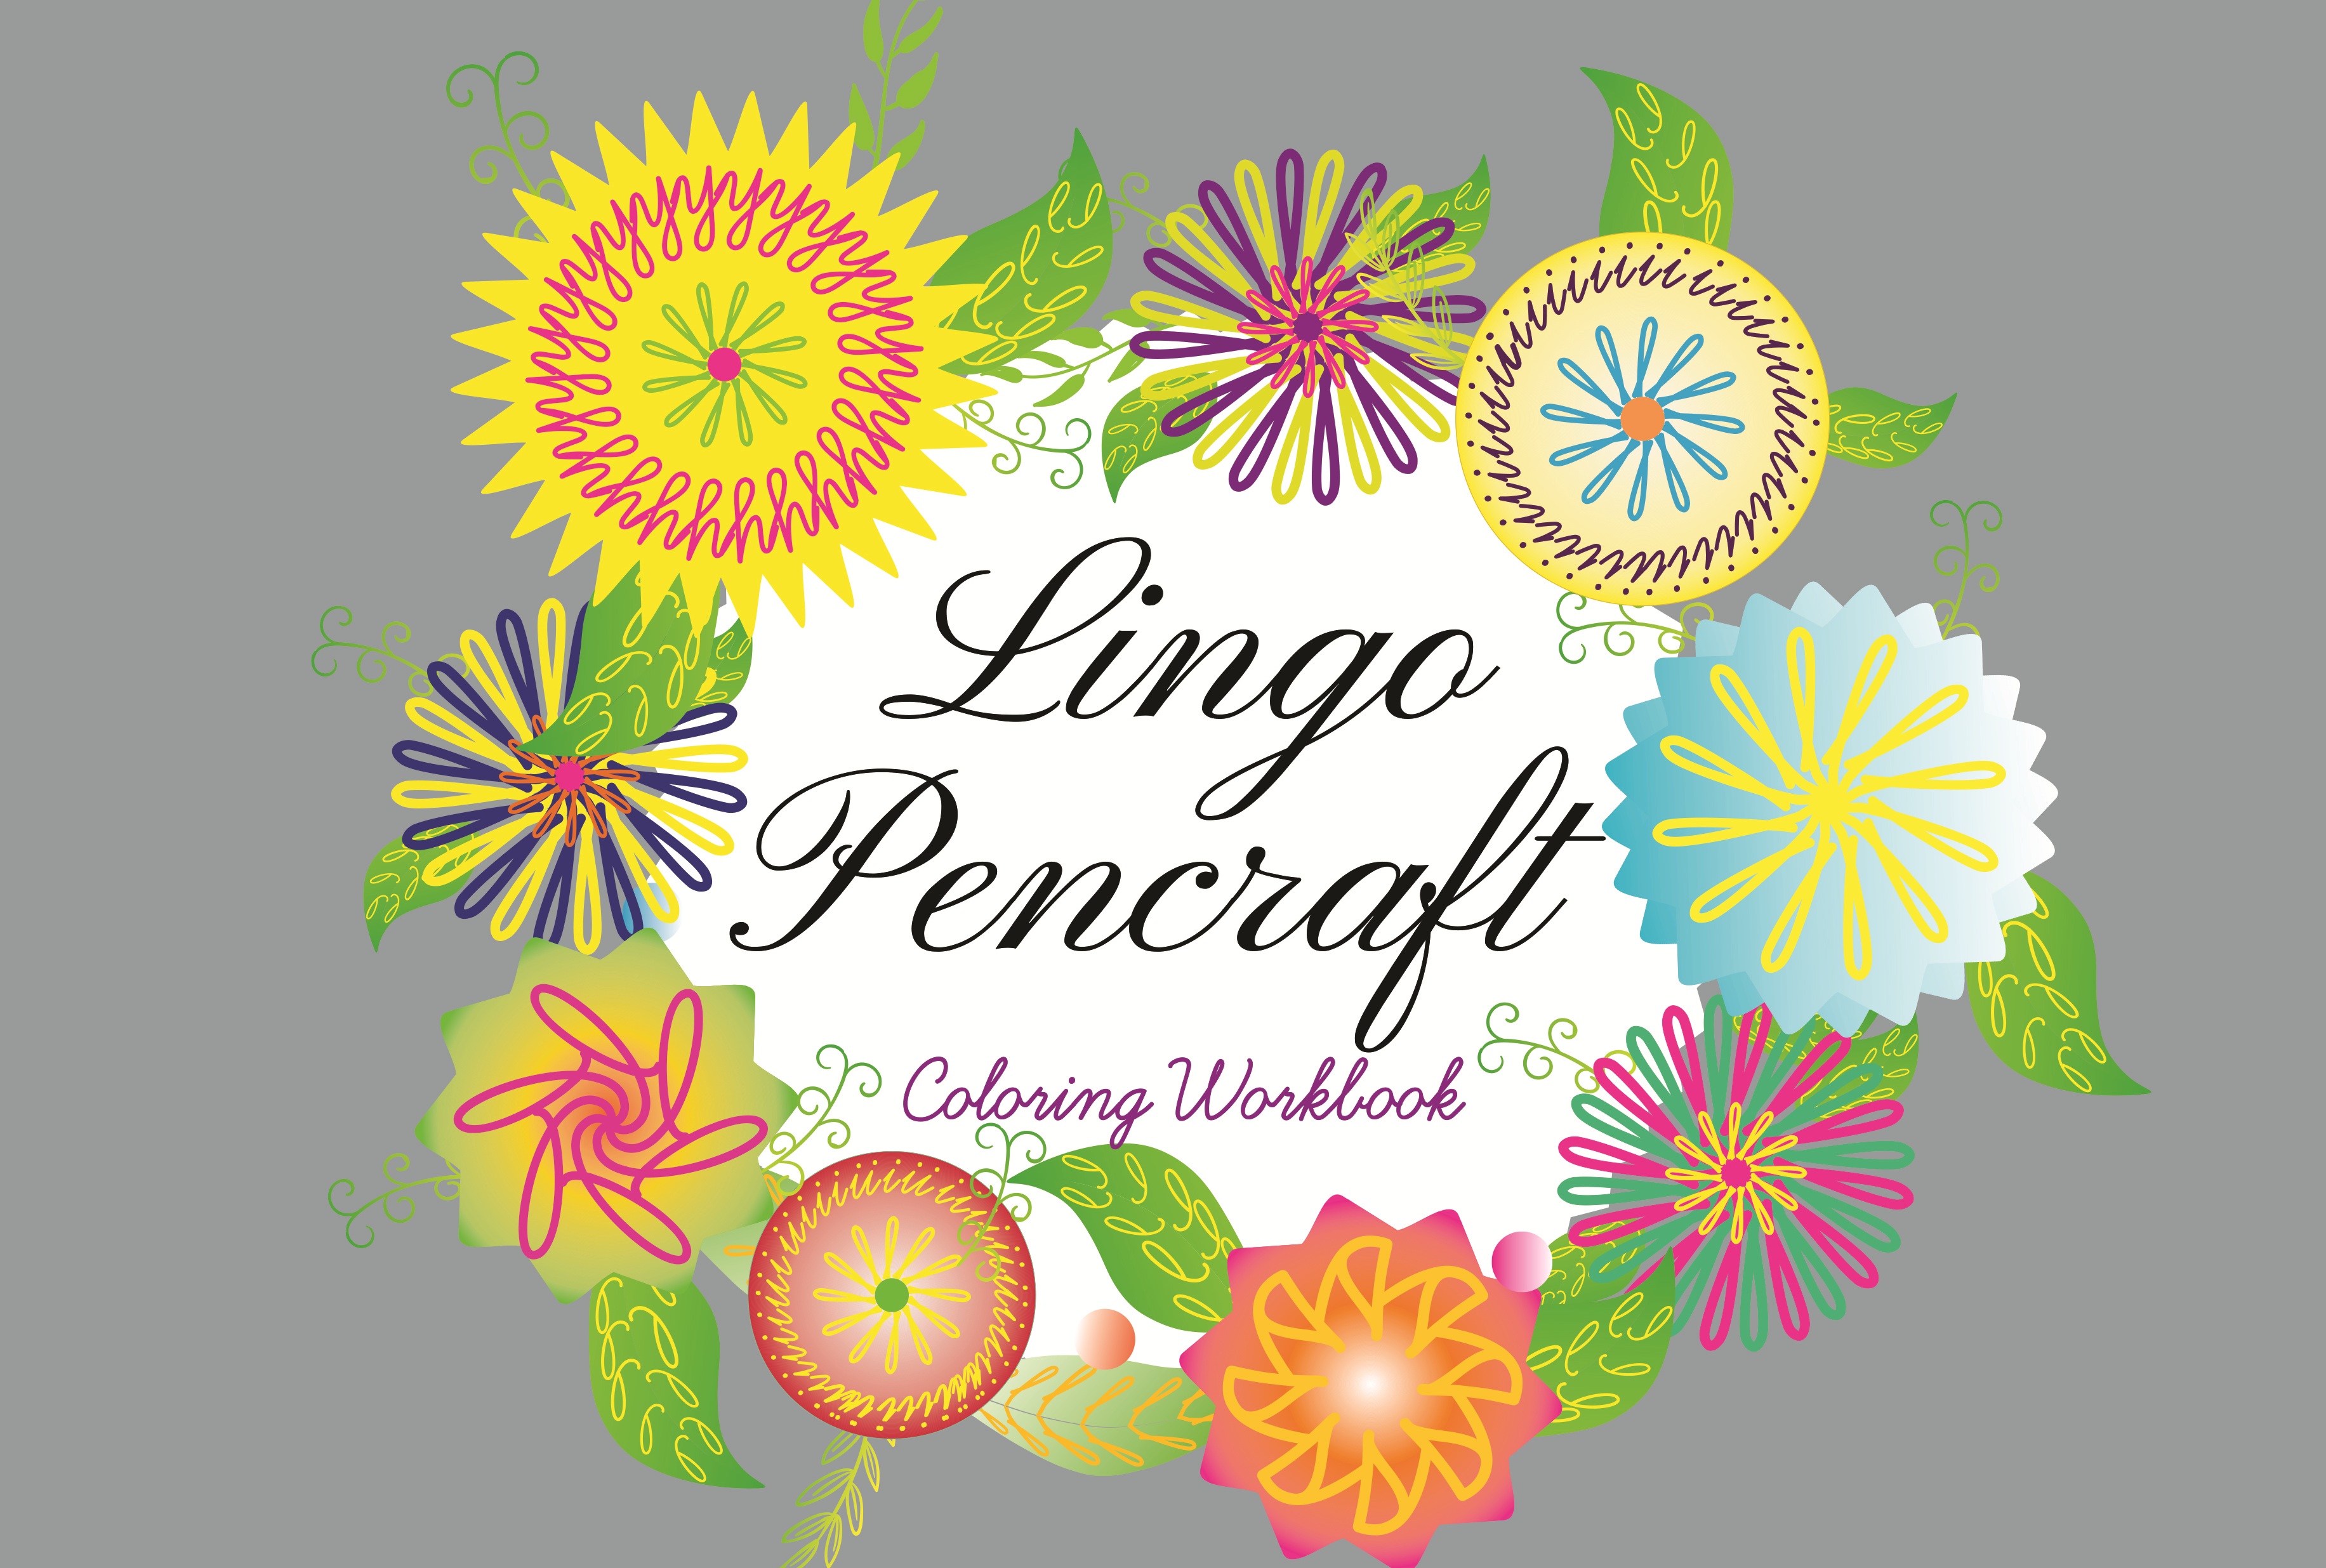 Lingo Pencraft coloring workbook